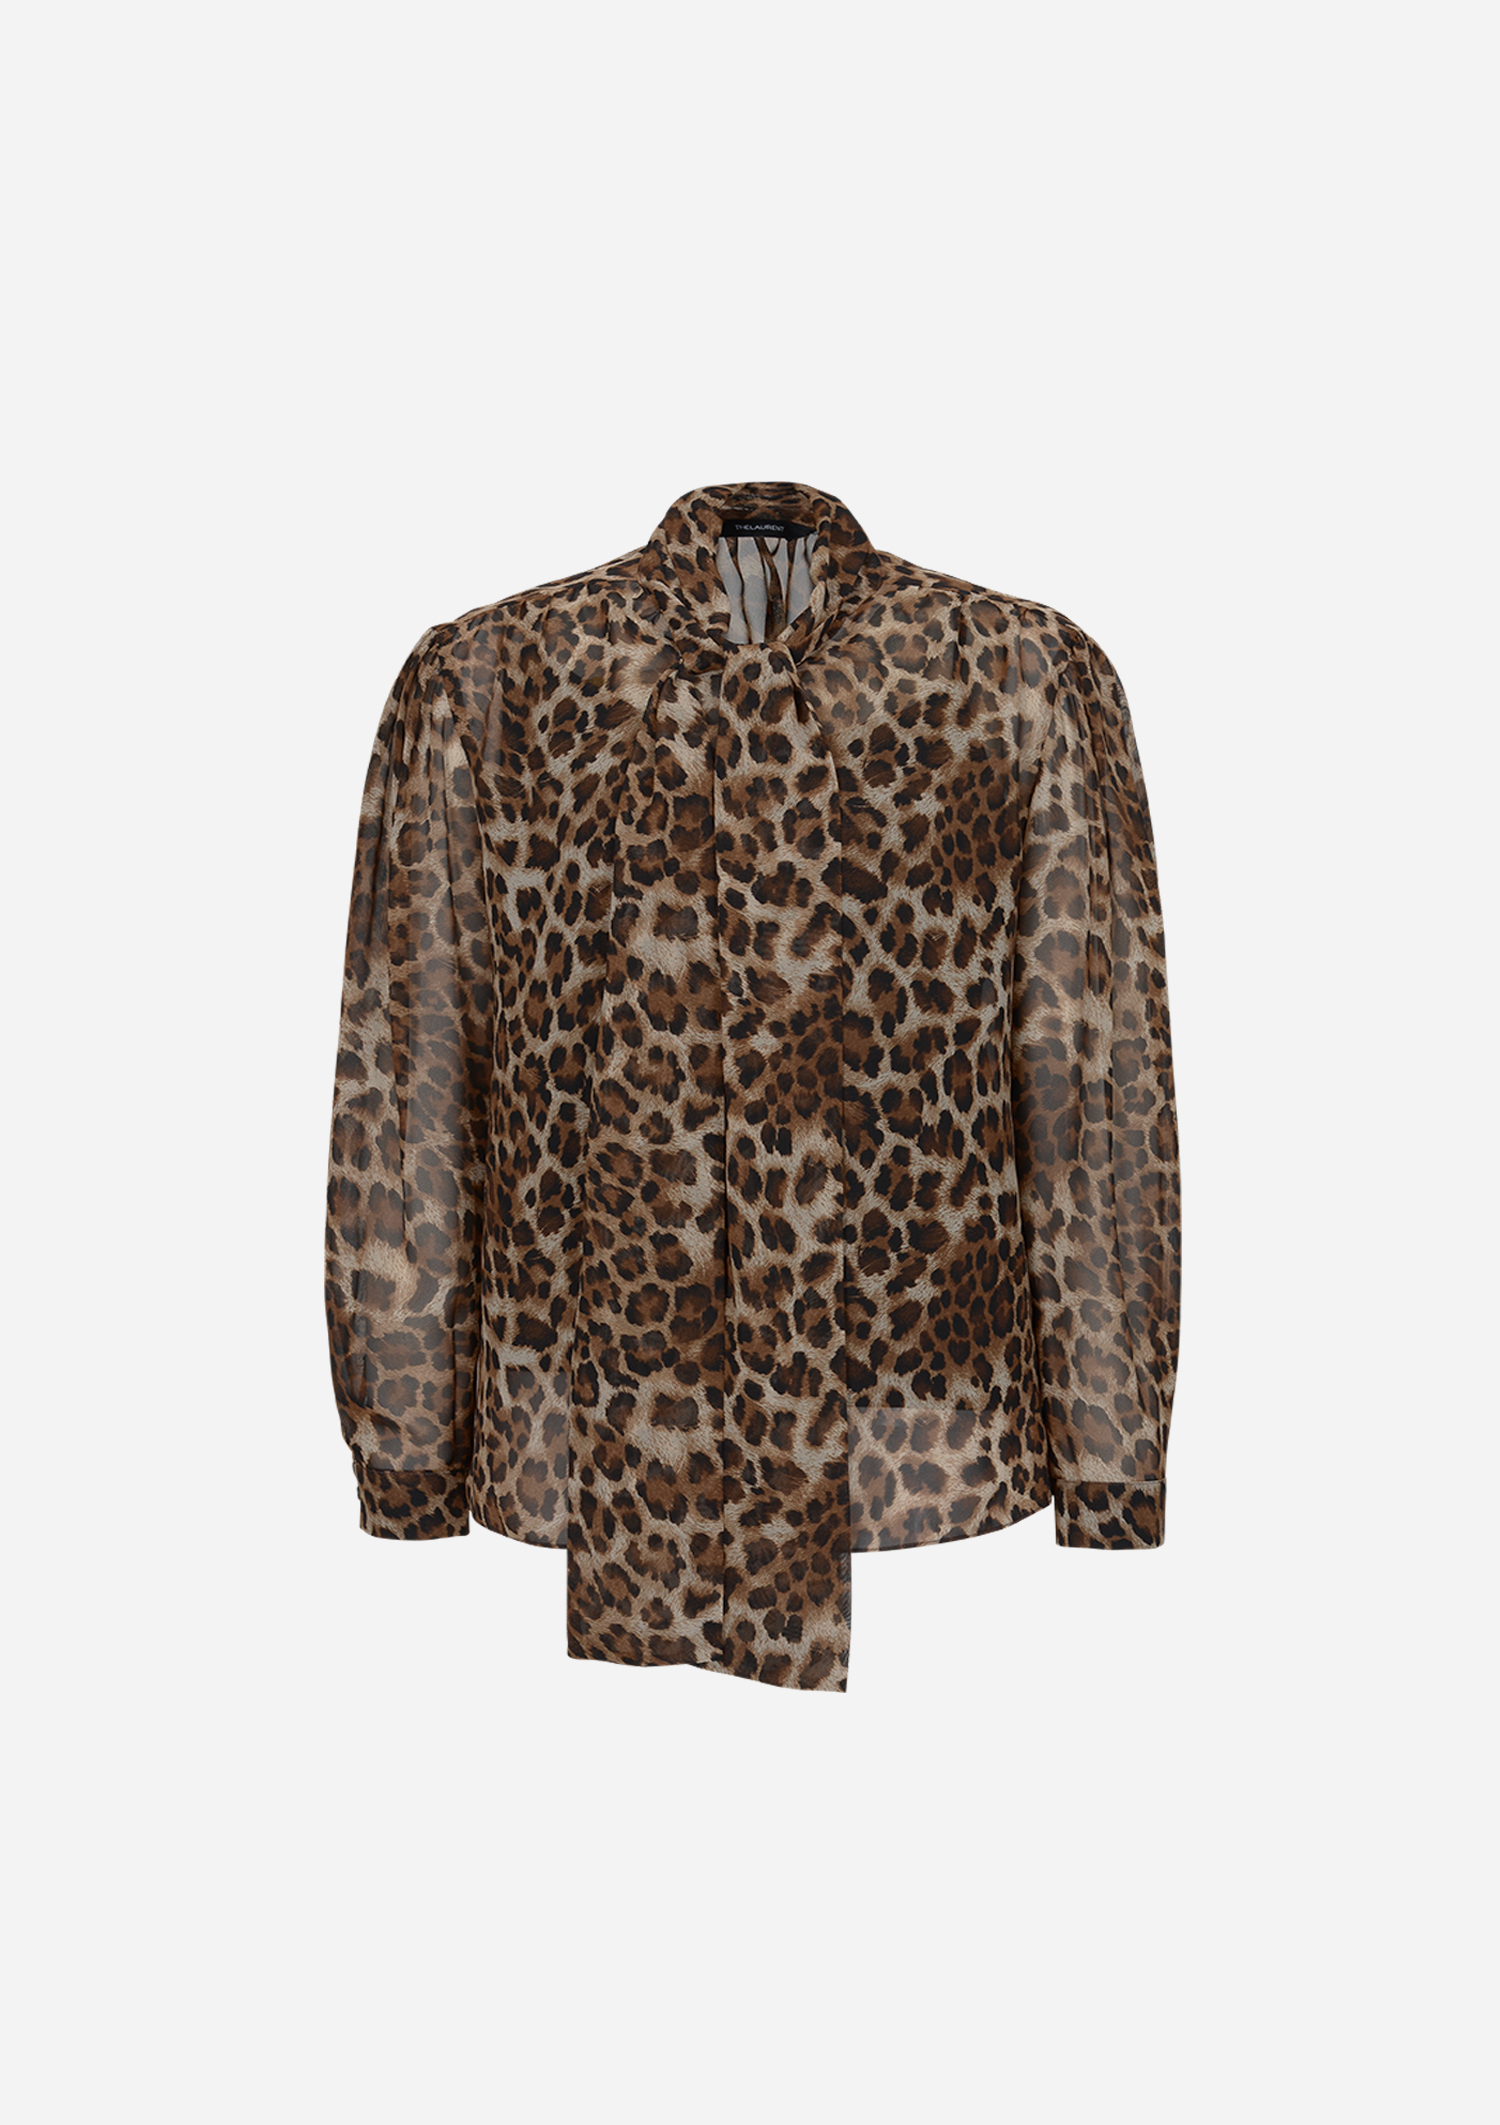 Leopard swipon blouse (slip sleeveless set)